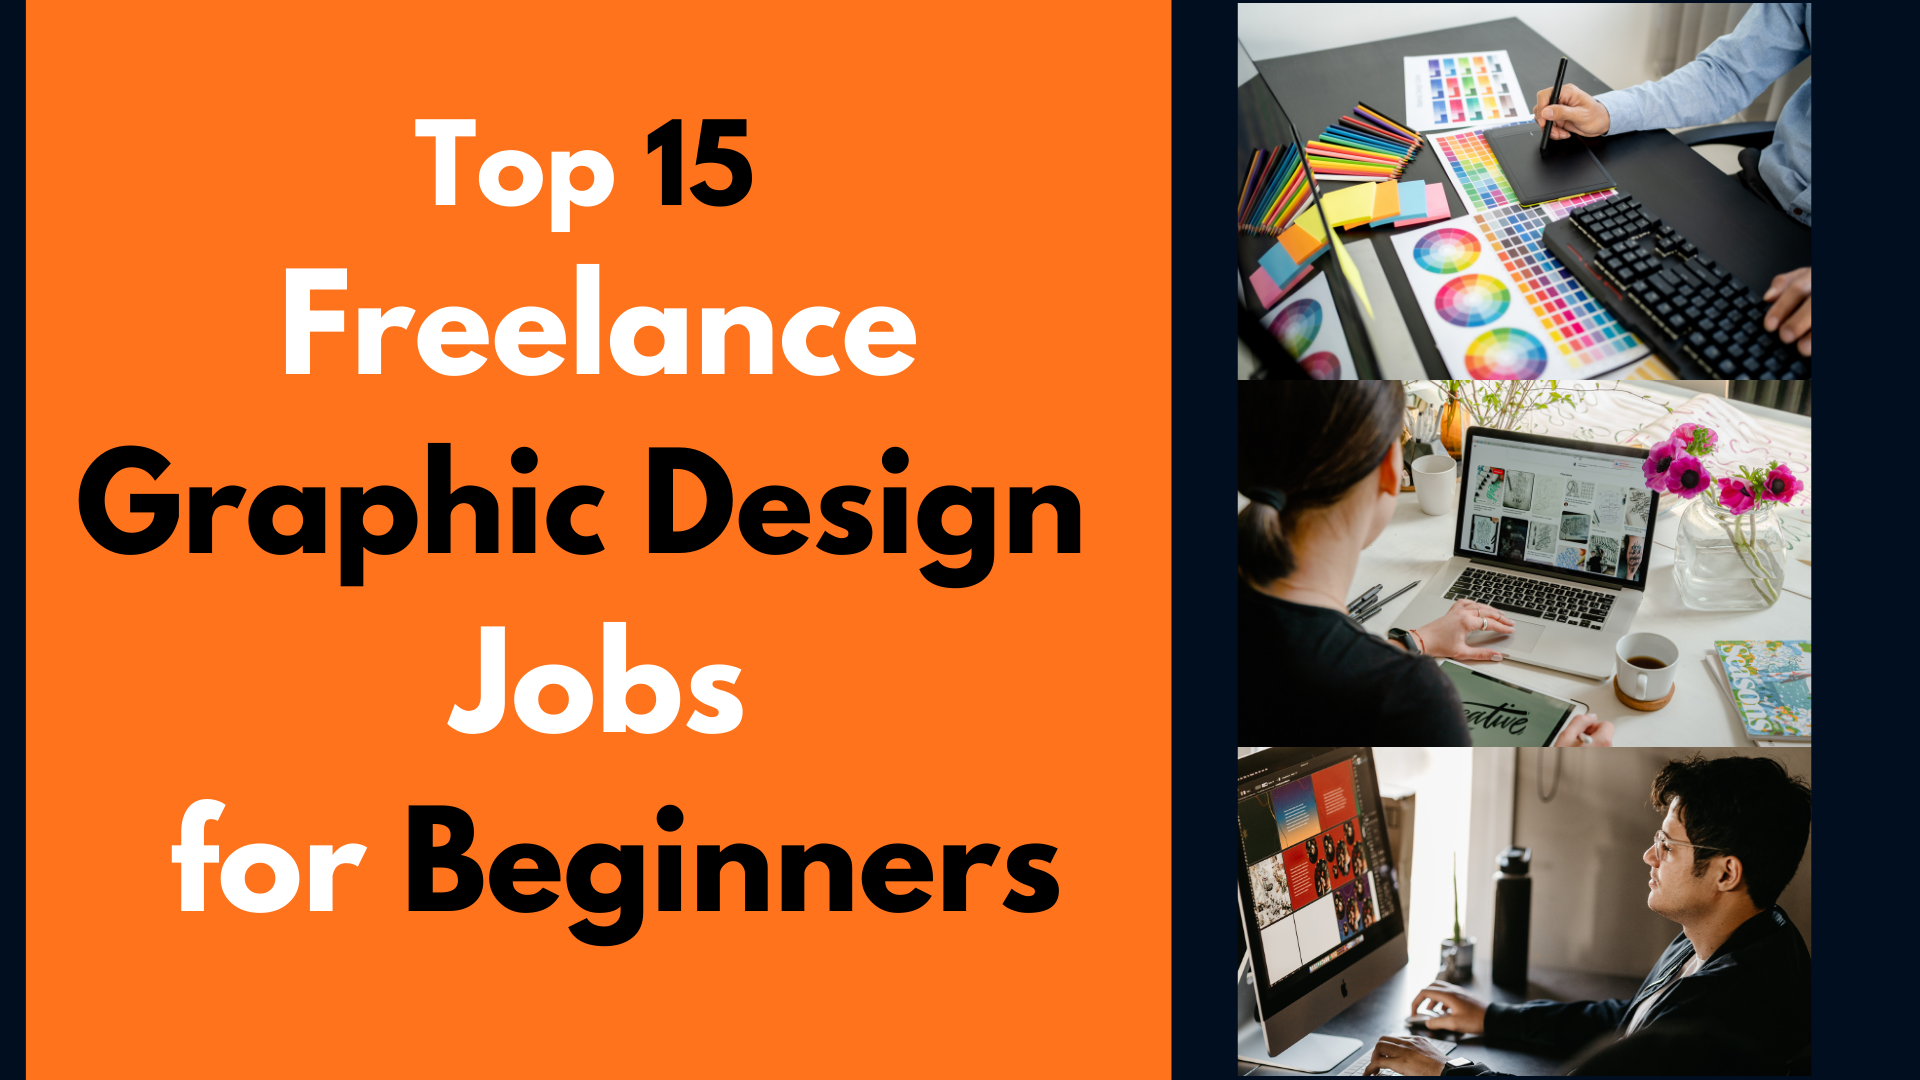 Freelance Graphic Design Jobs for Beginners